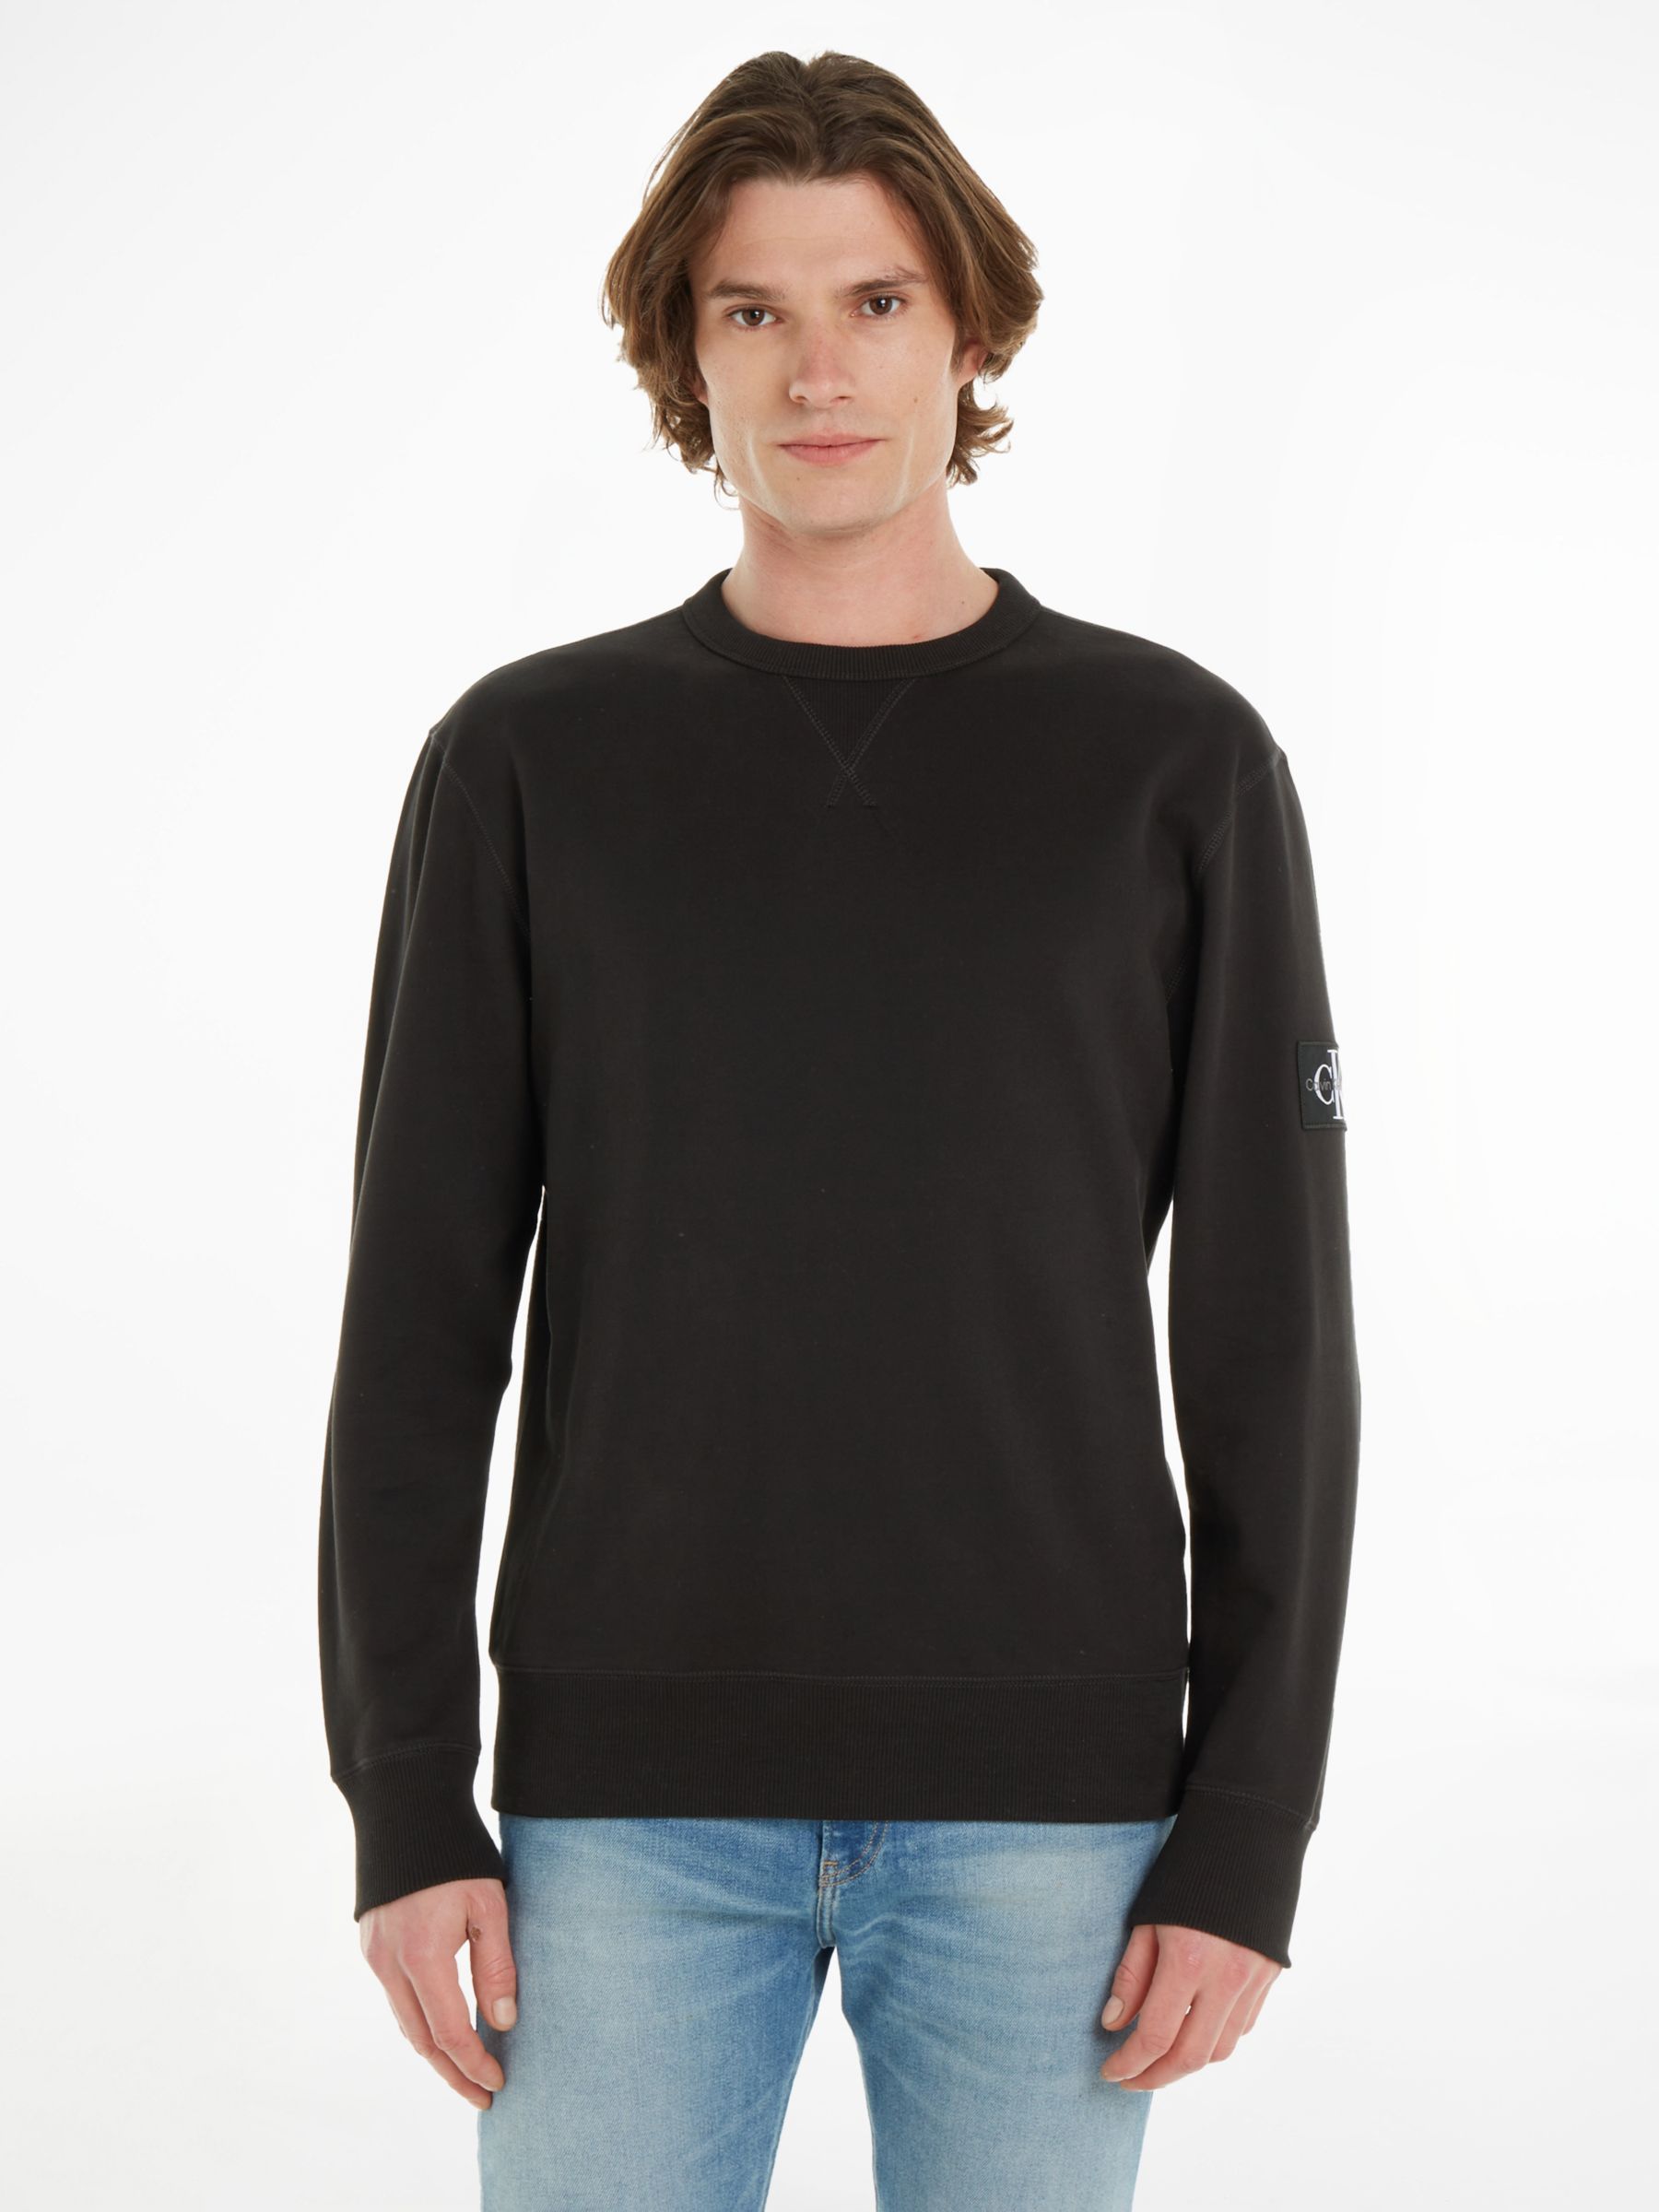 Calvin Klein Monologo Sweatshirt, Black, L